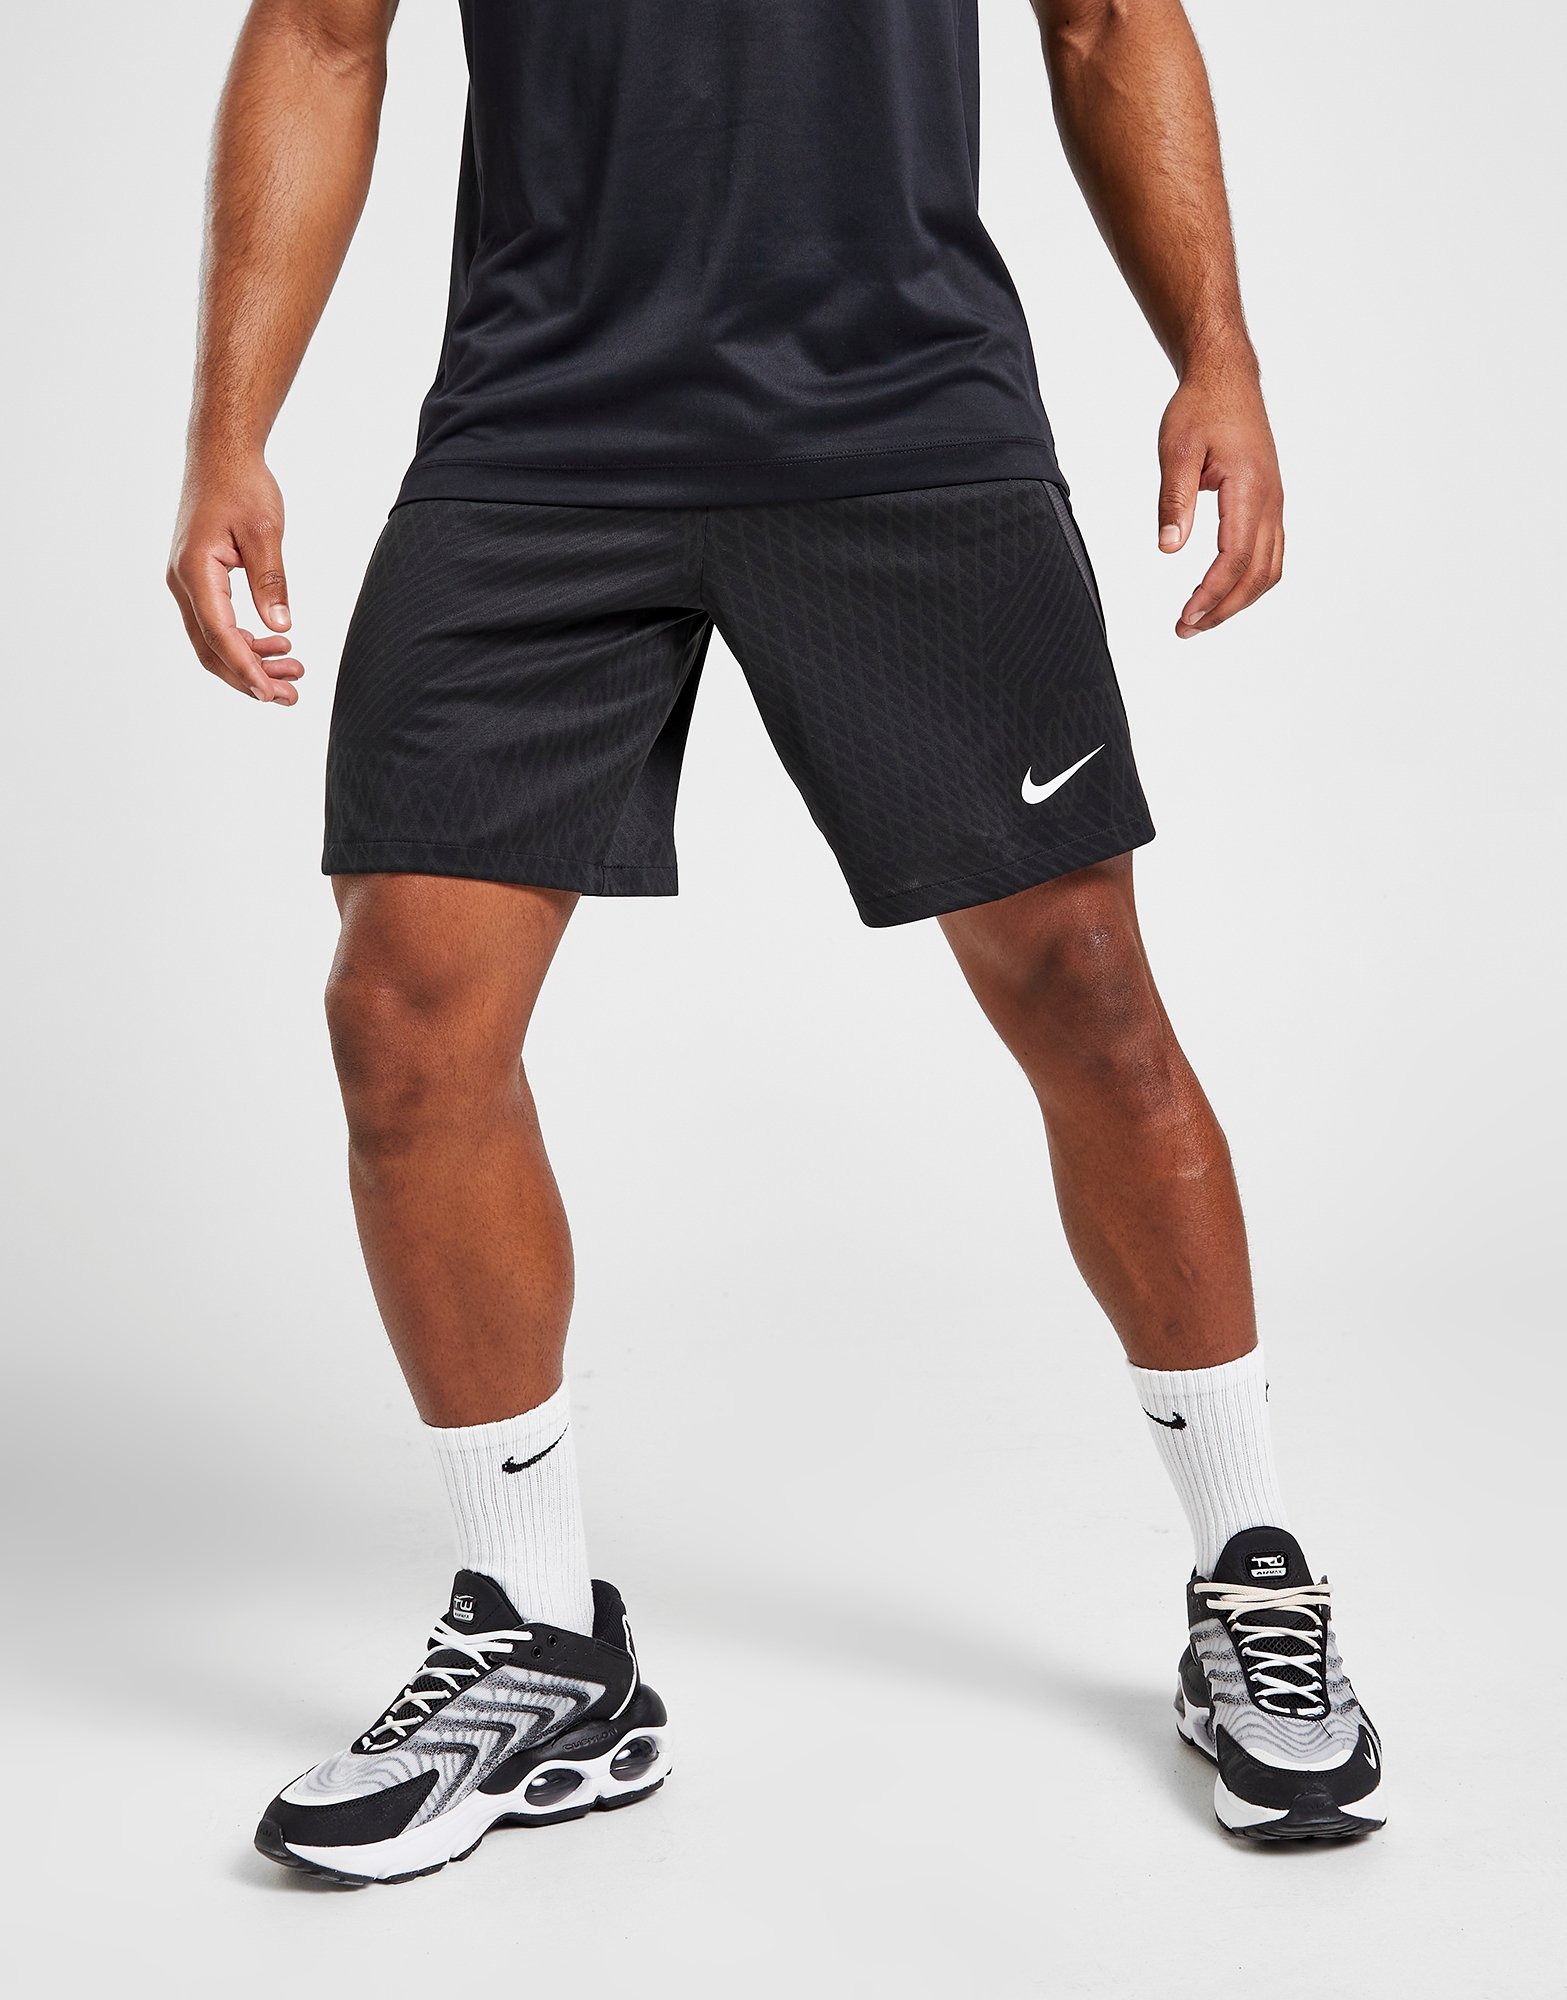 Black Nike Shorts For Men